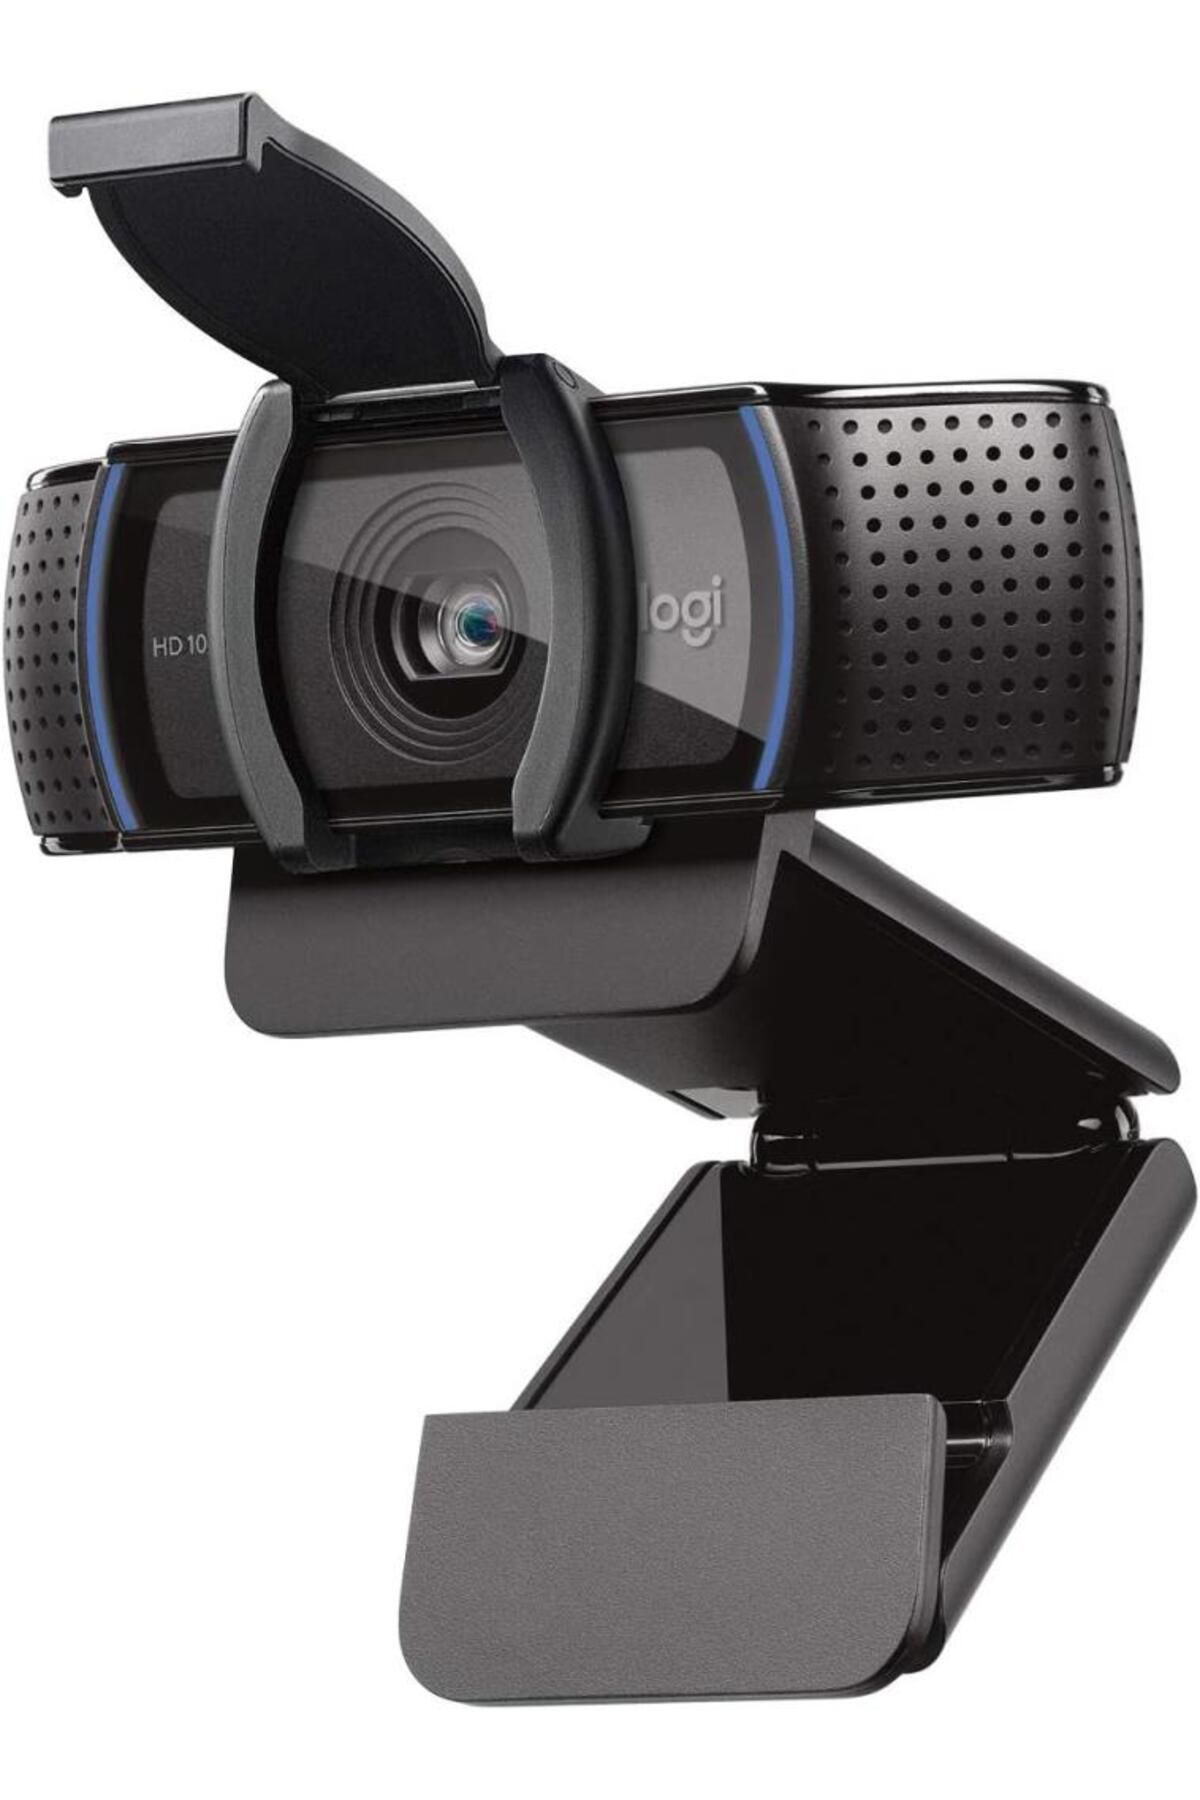 logitech C920s ProHD 1080P Streaming Webcam - 960-001252